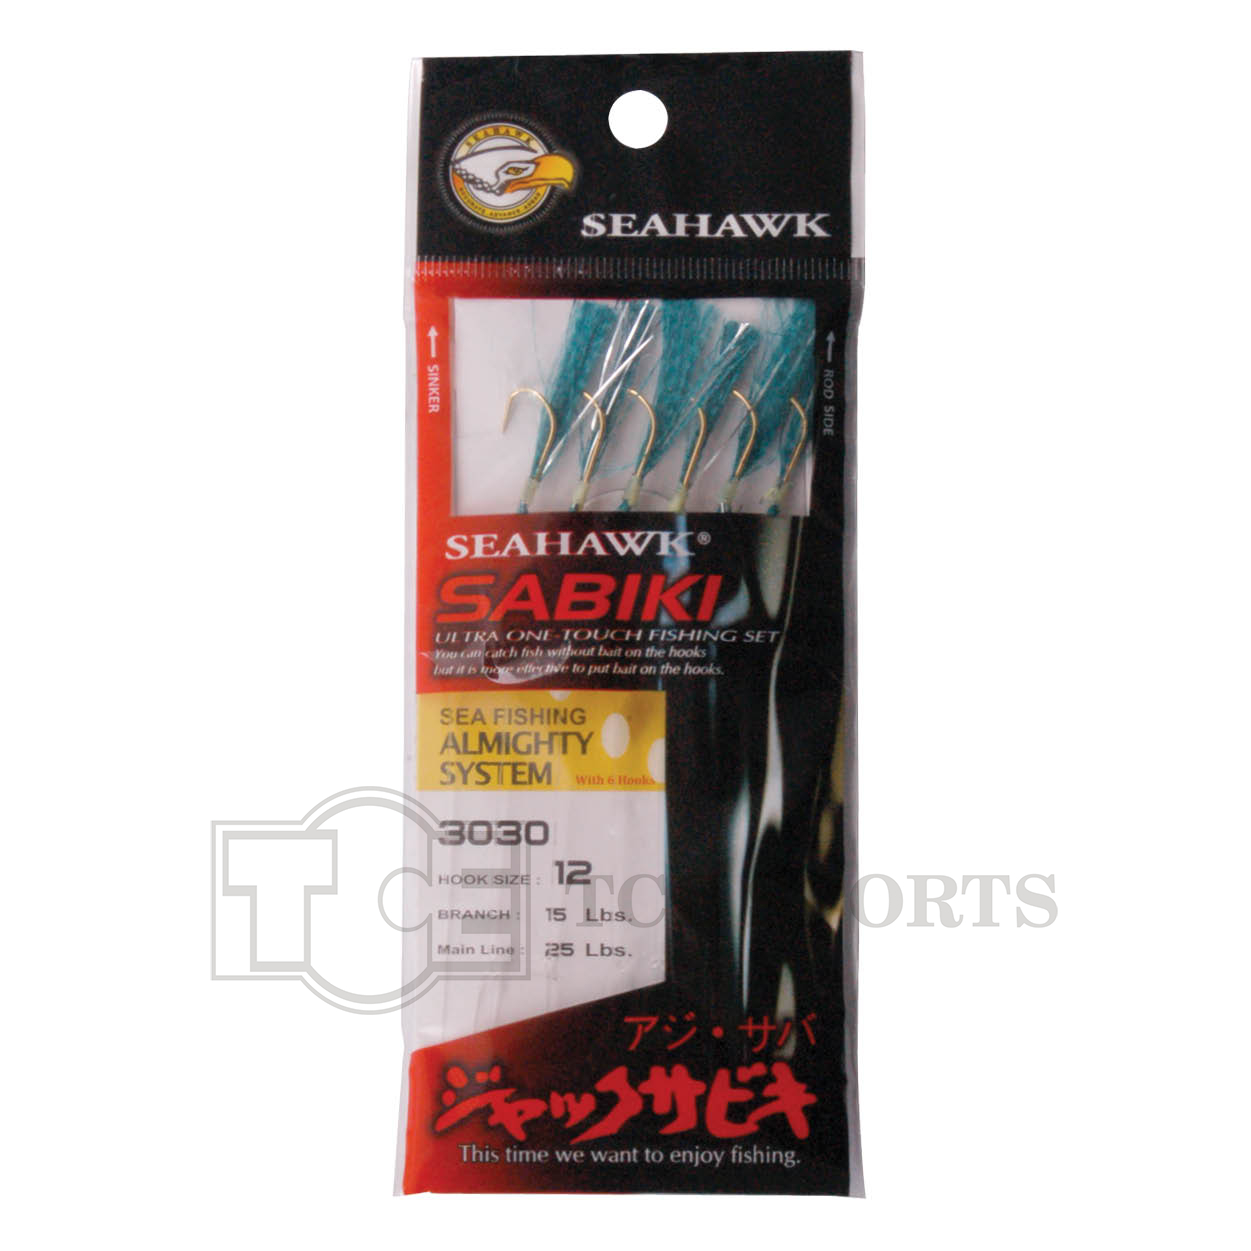 Seahawk - Sabiki 3030 - Main